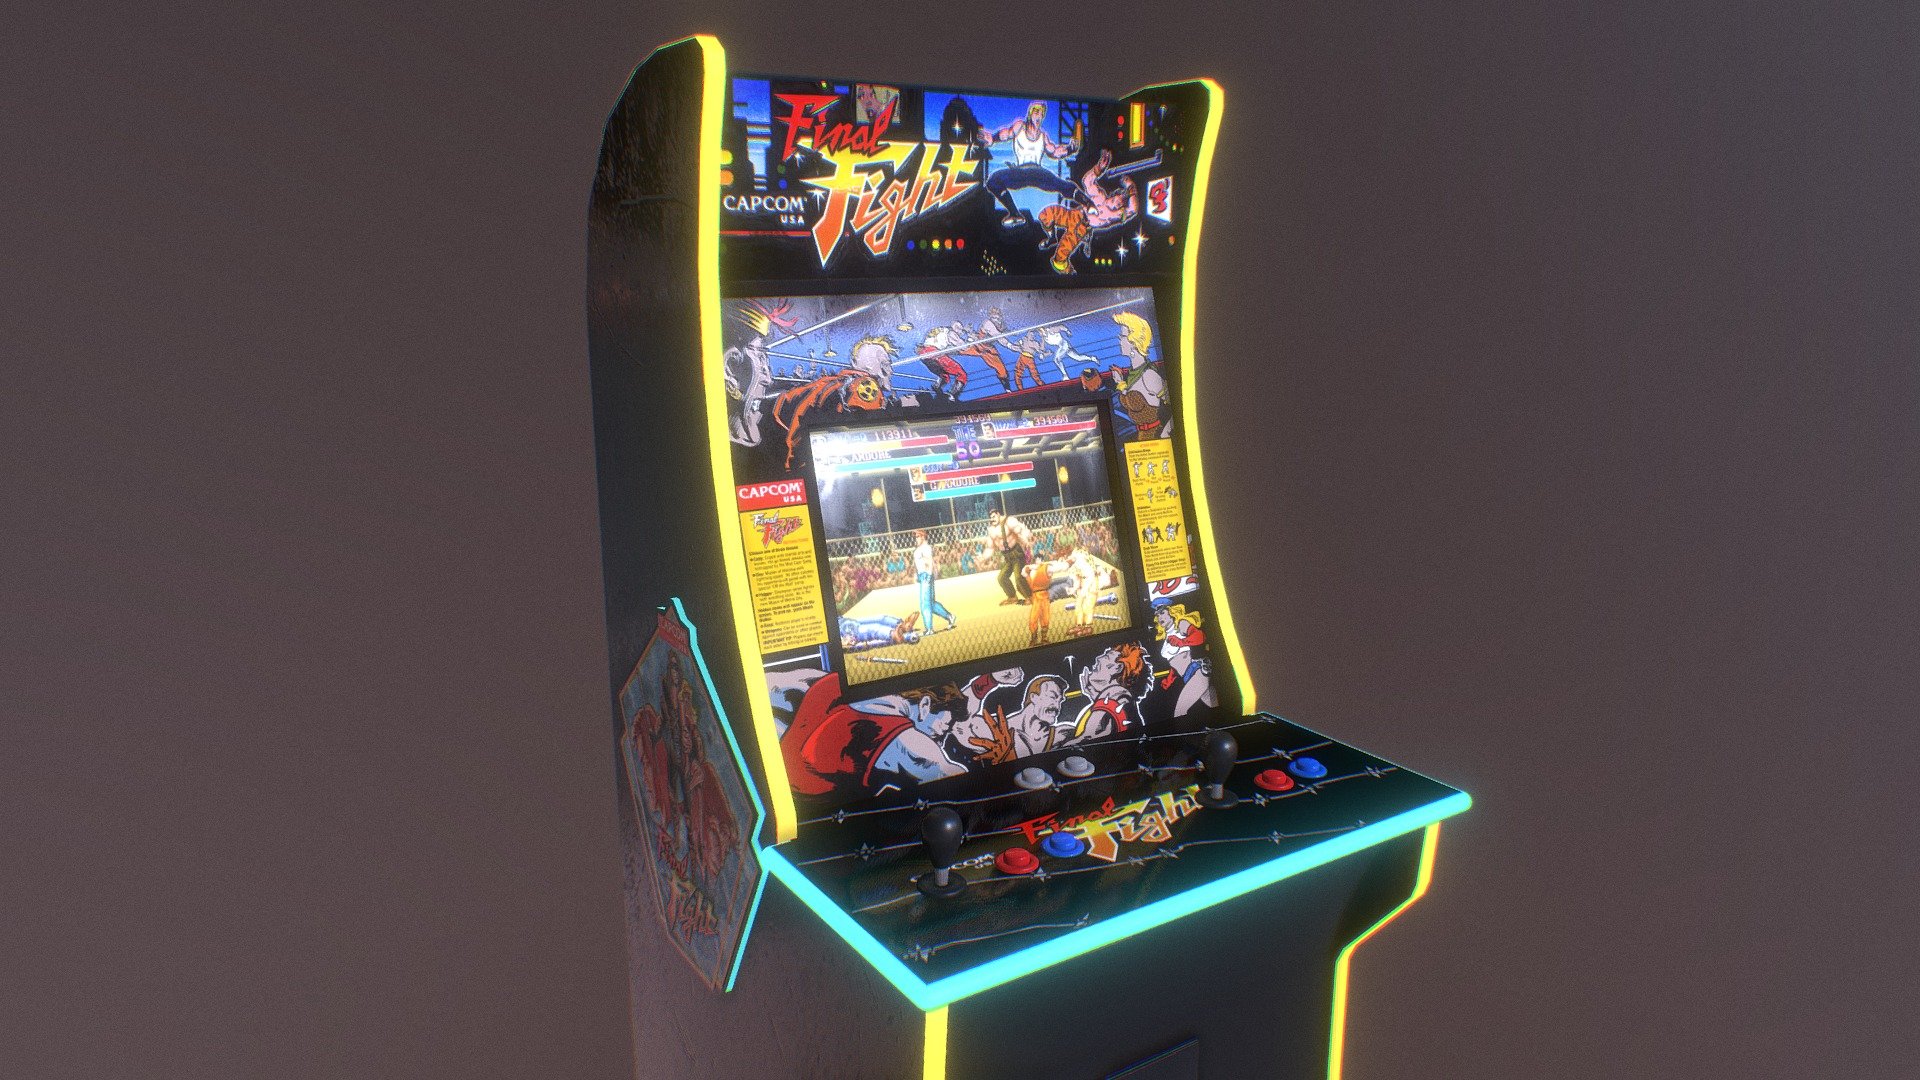 battle gear 3 arcade